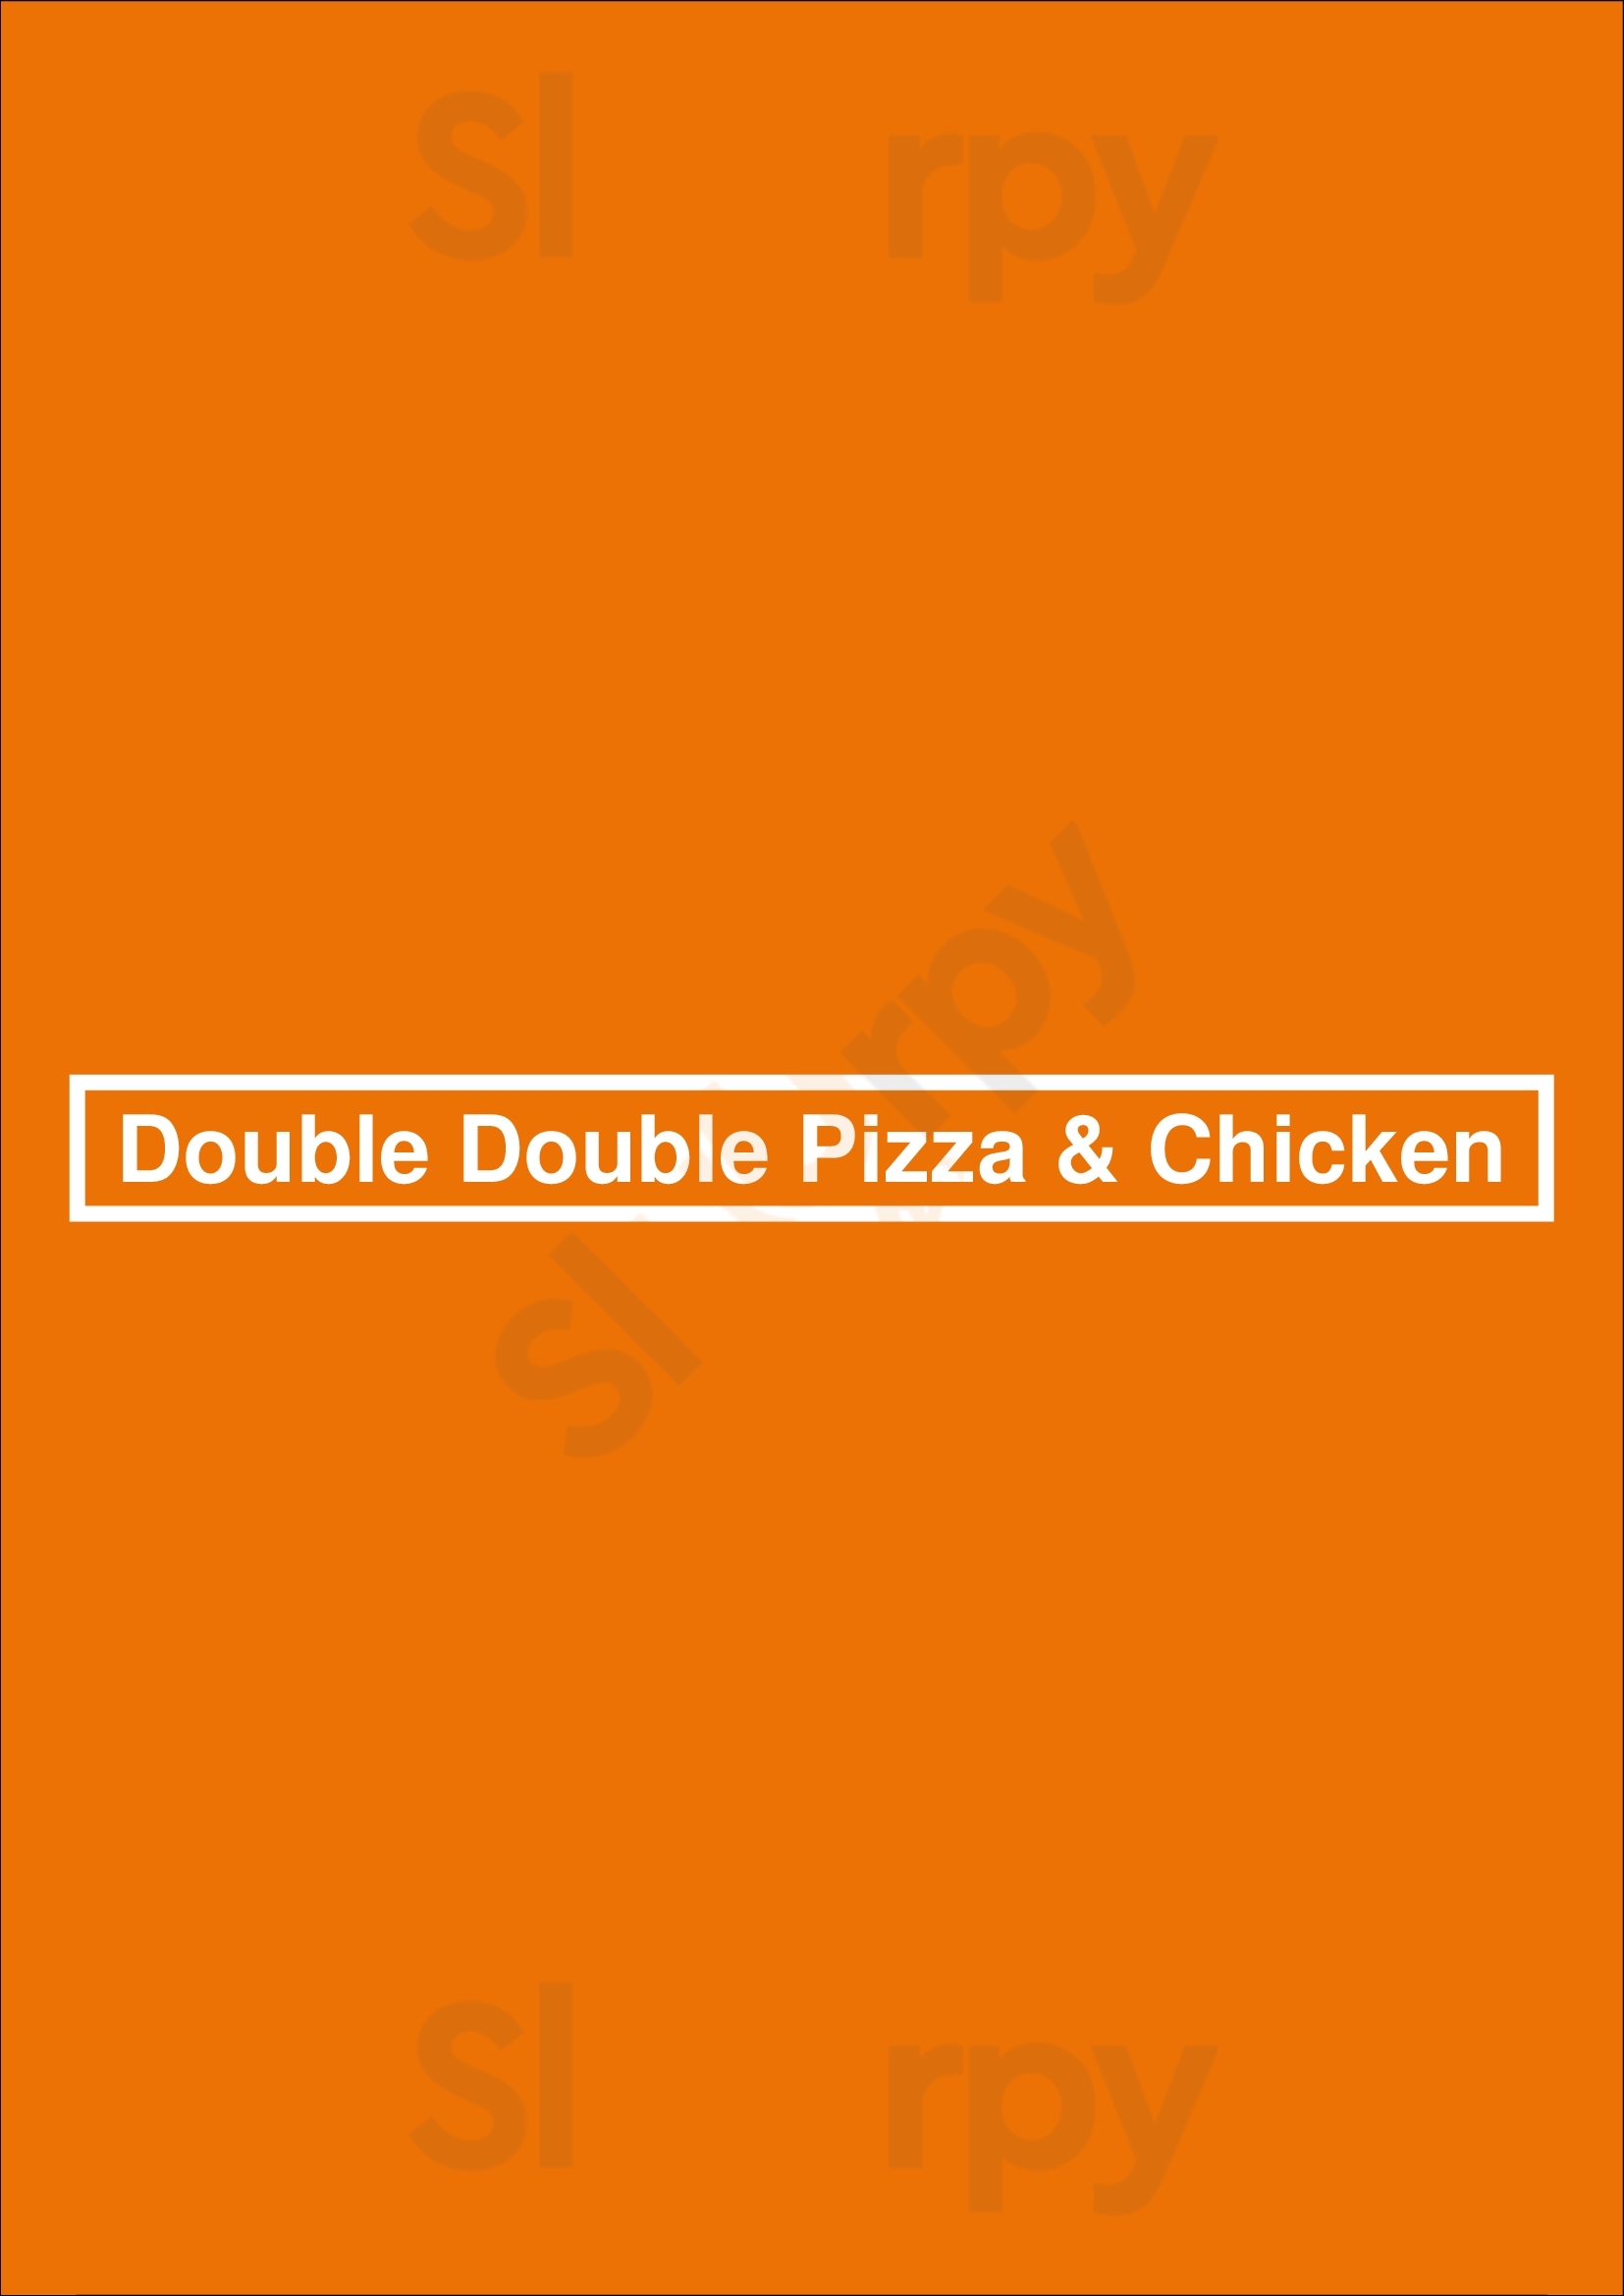 Double Double Pizza & Chicken Toronto Menu - 1